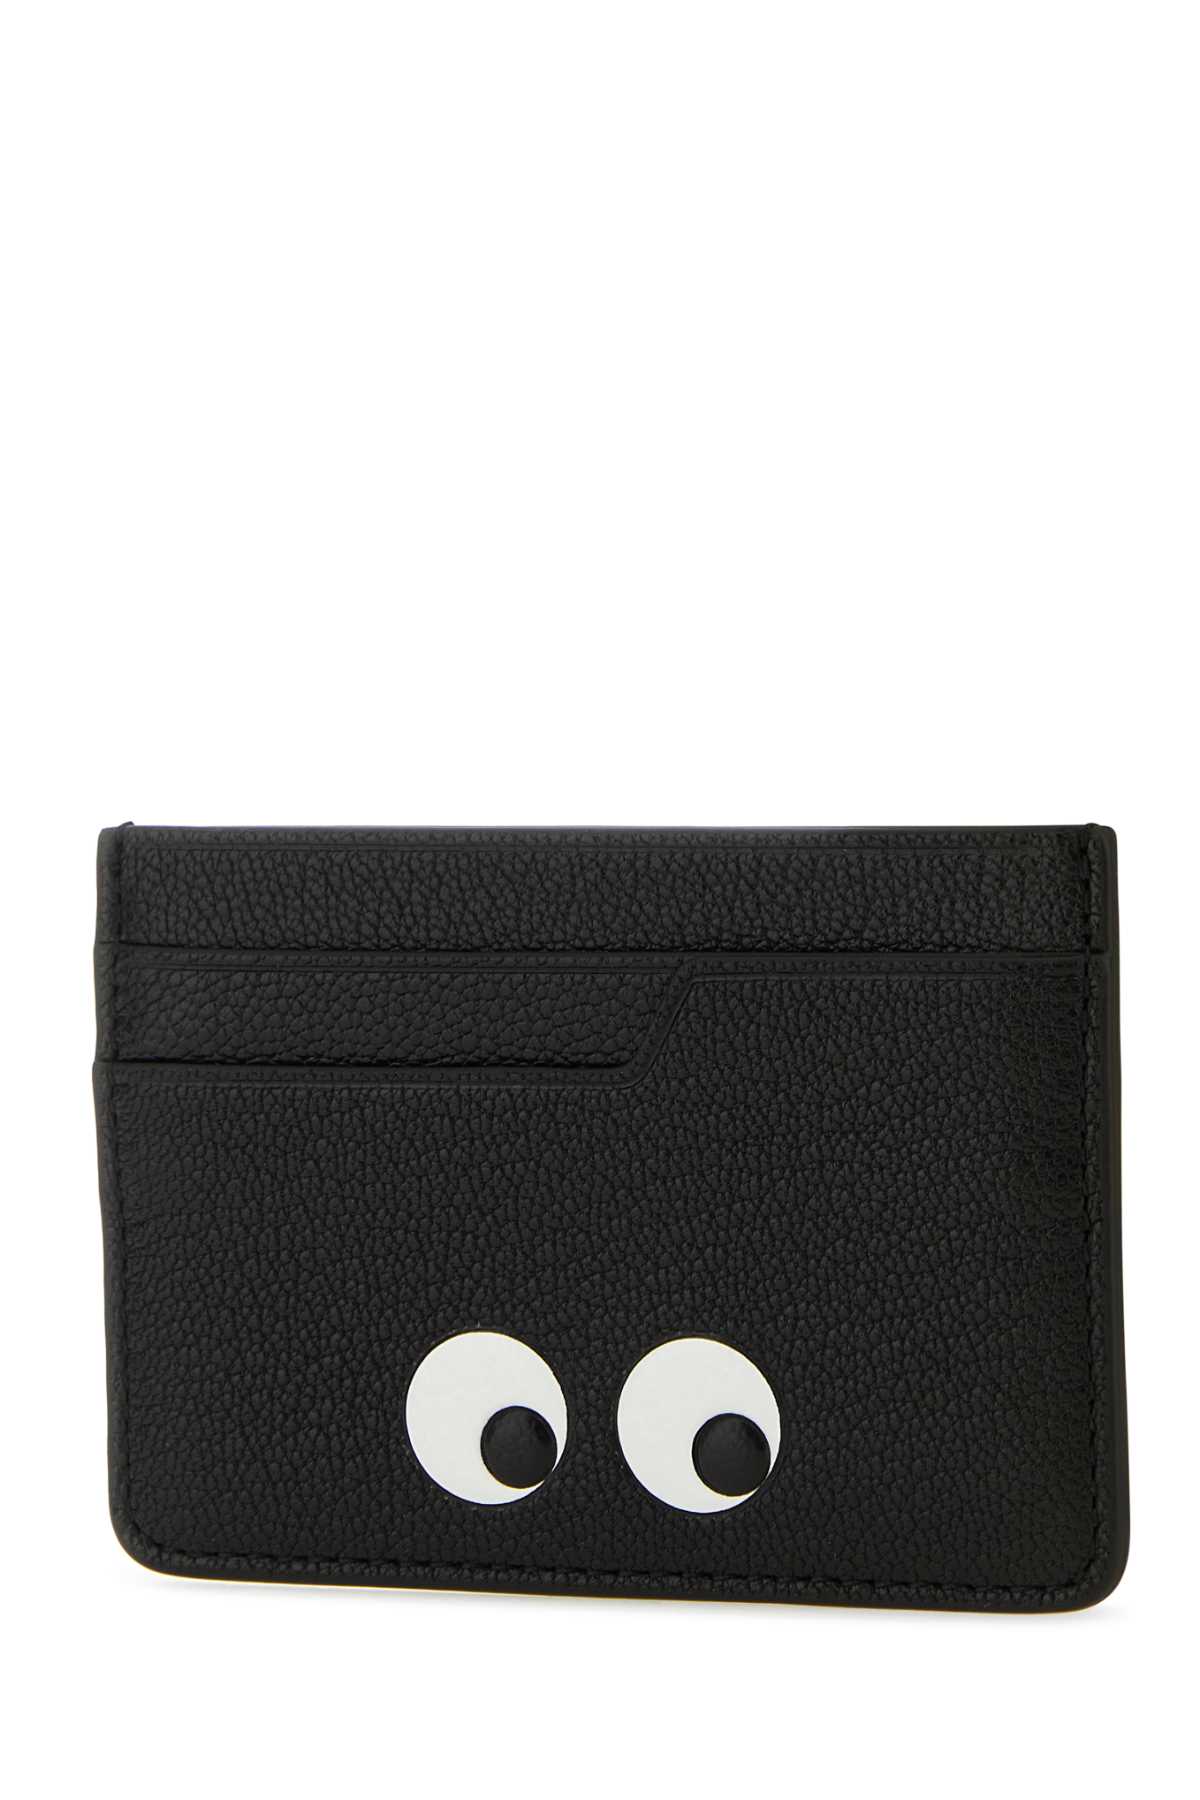 Shop Anya Hindmarch Black Leather Card Holder